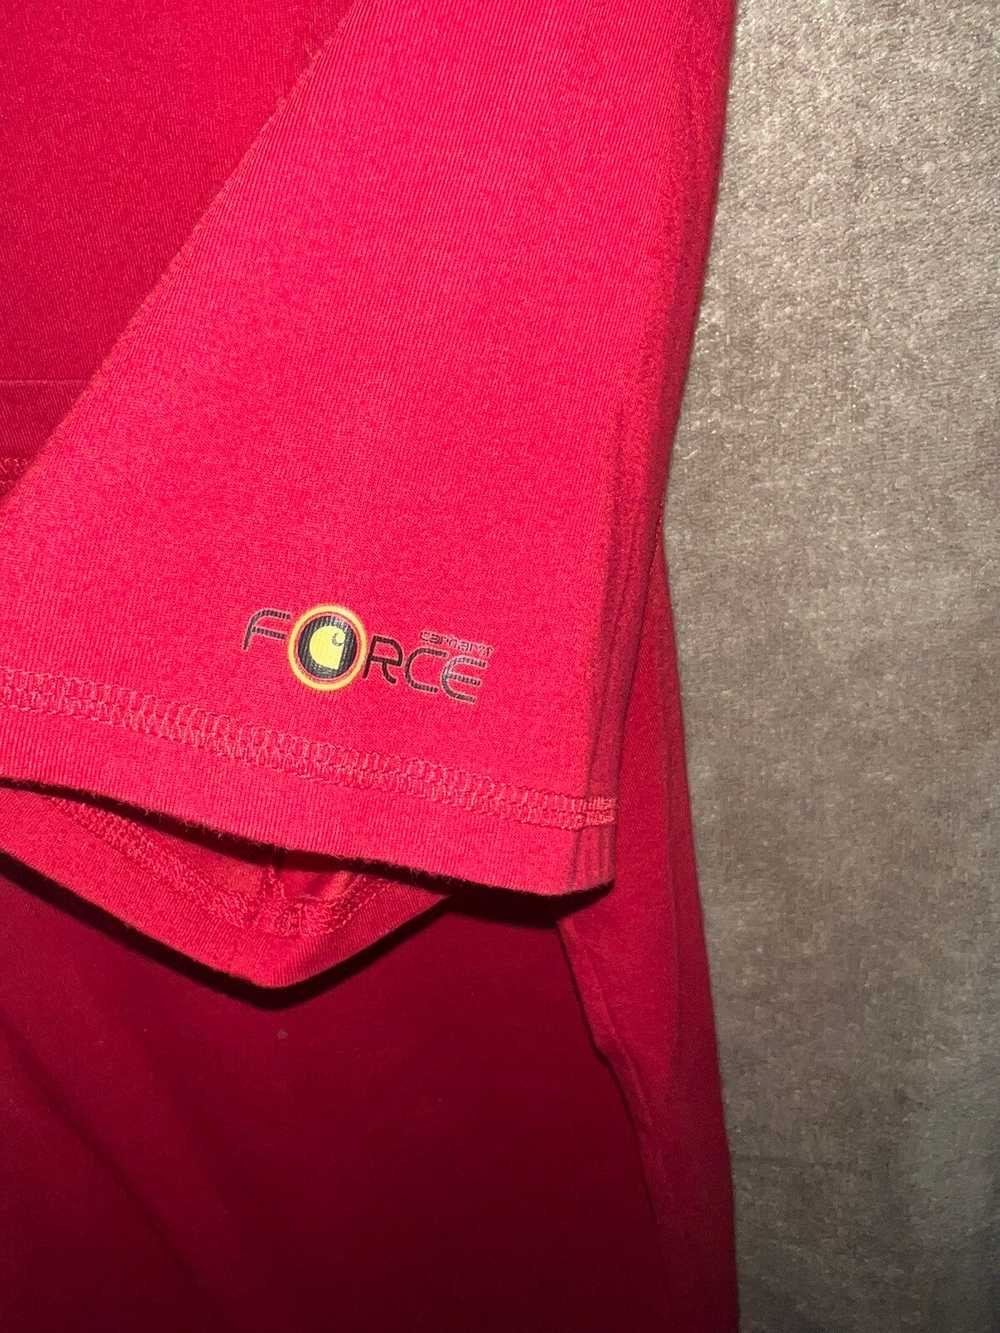 Carhartt Carhartt Men’s Relaxed Fit T Shirt Red S… - image 4